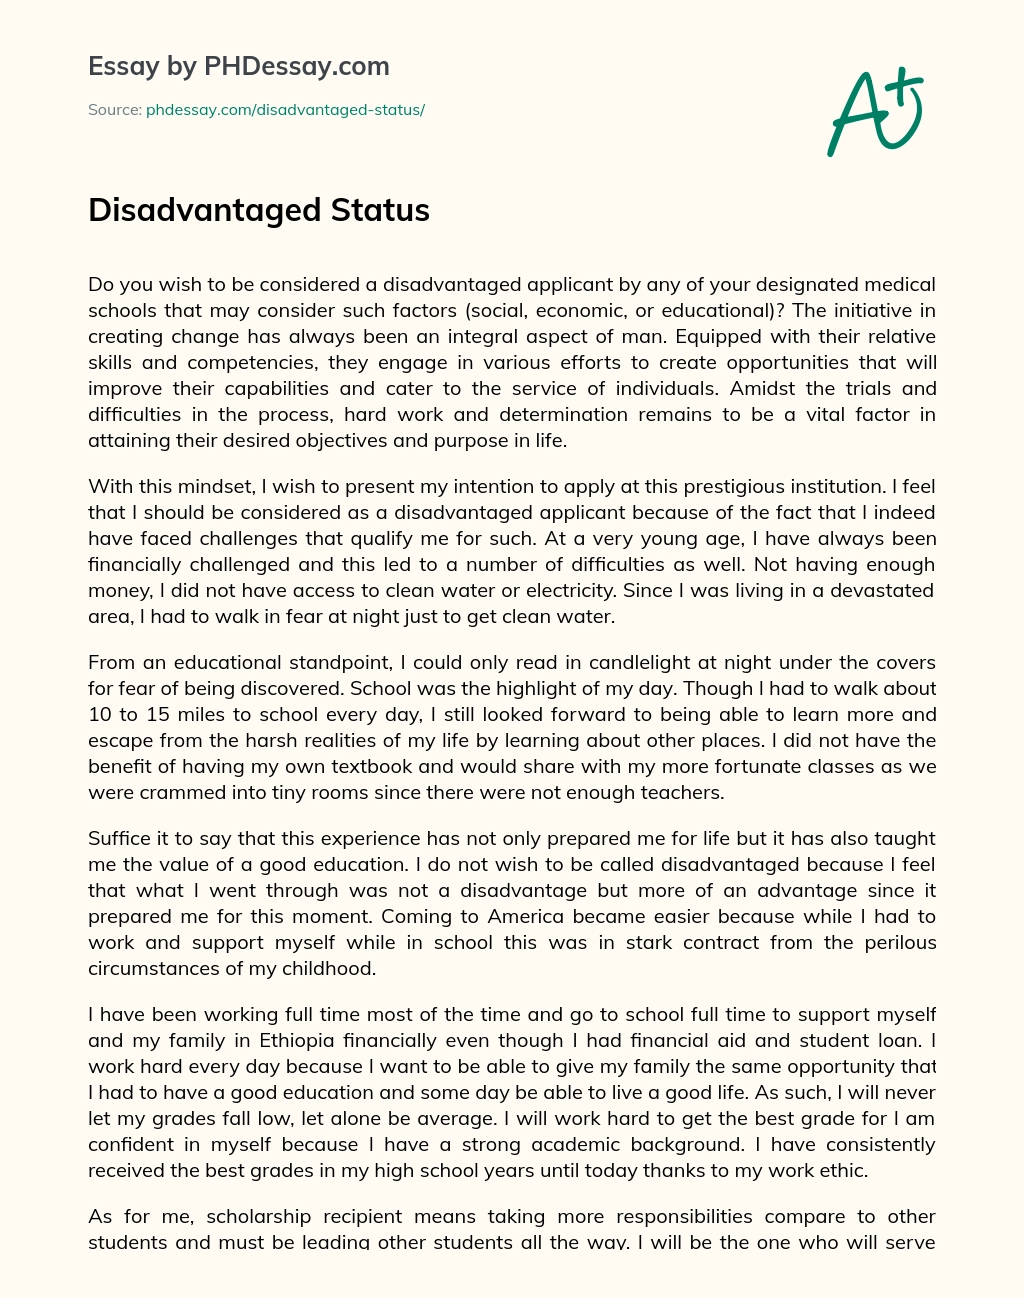 Disadvantaged Status essay